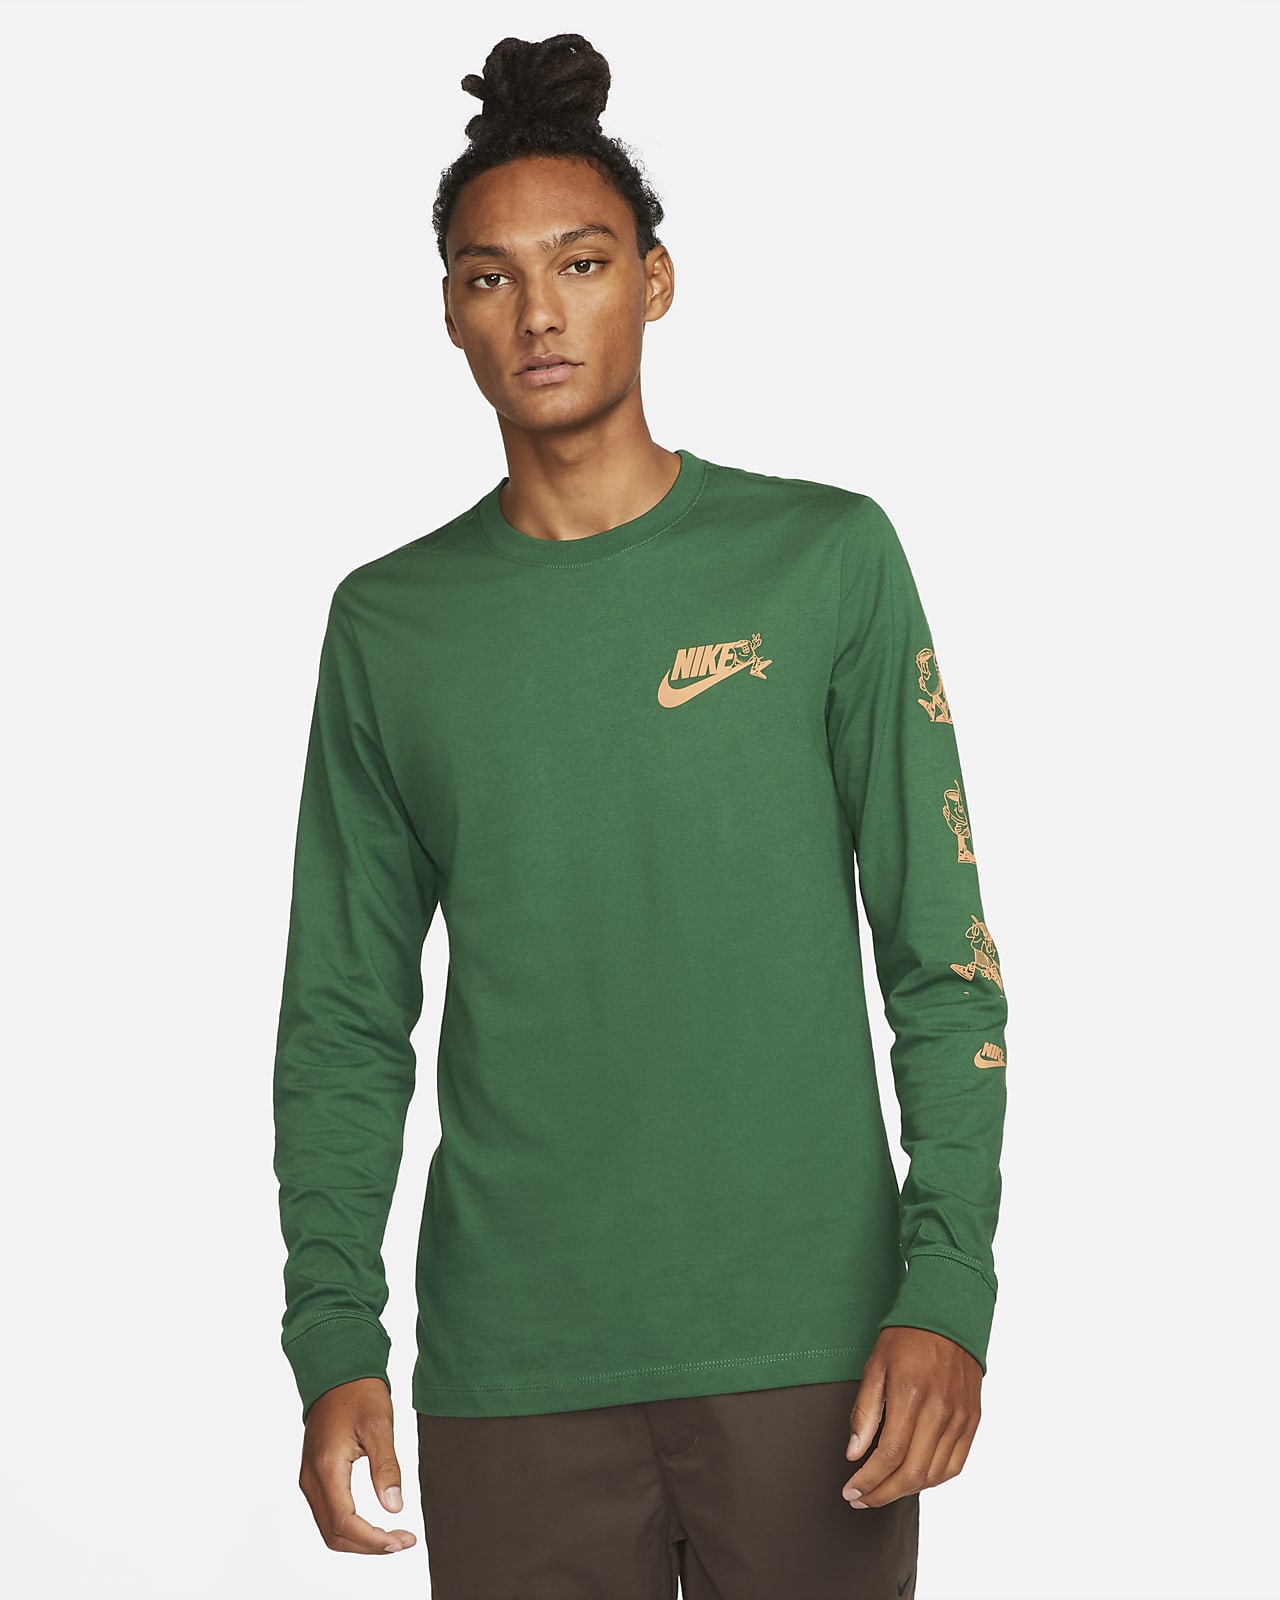 Men's Long-Sleeve T-Shirt. Nike.com